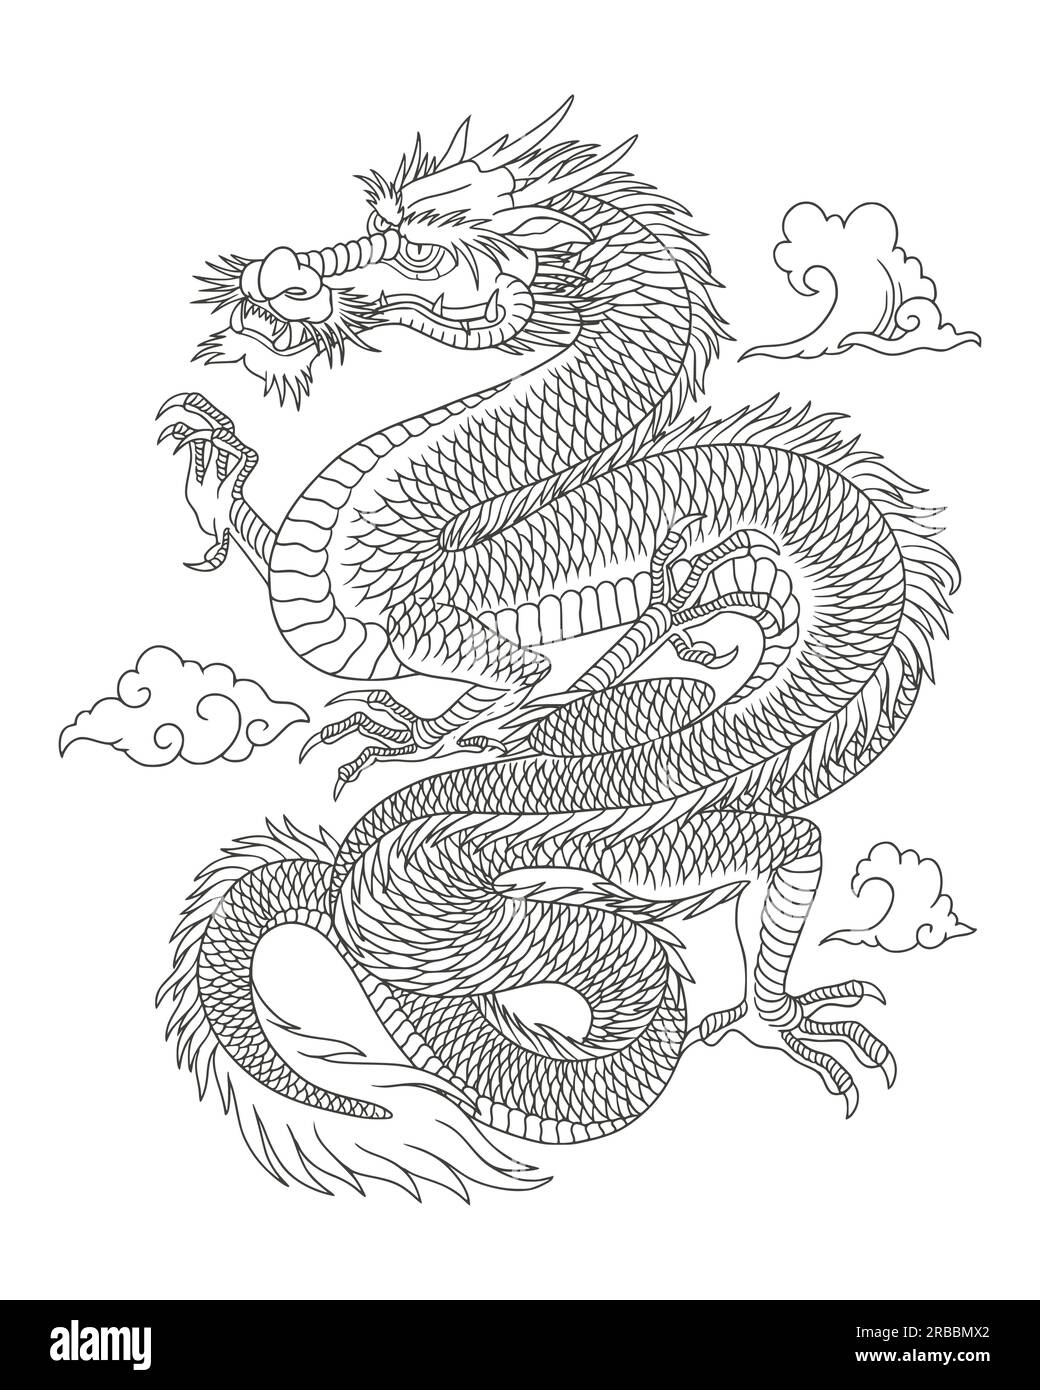 japanese dragon sketches